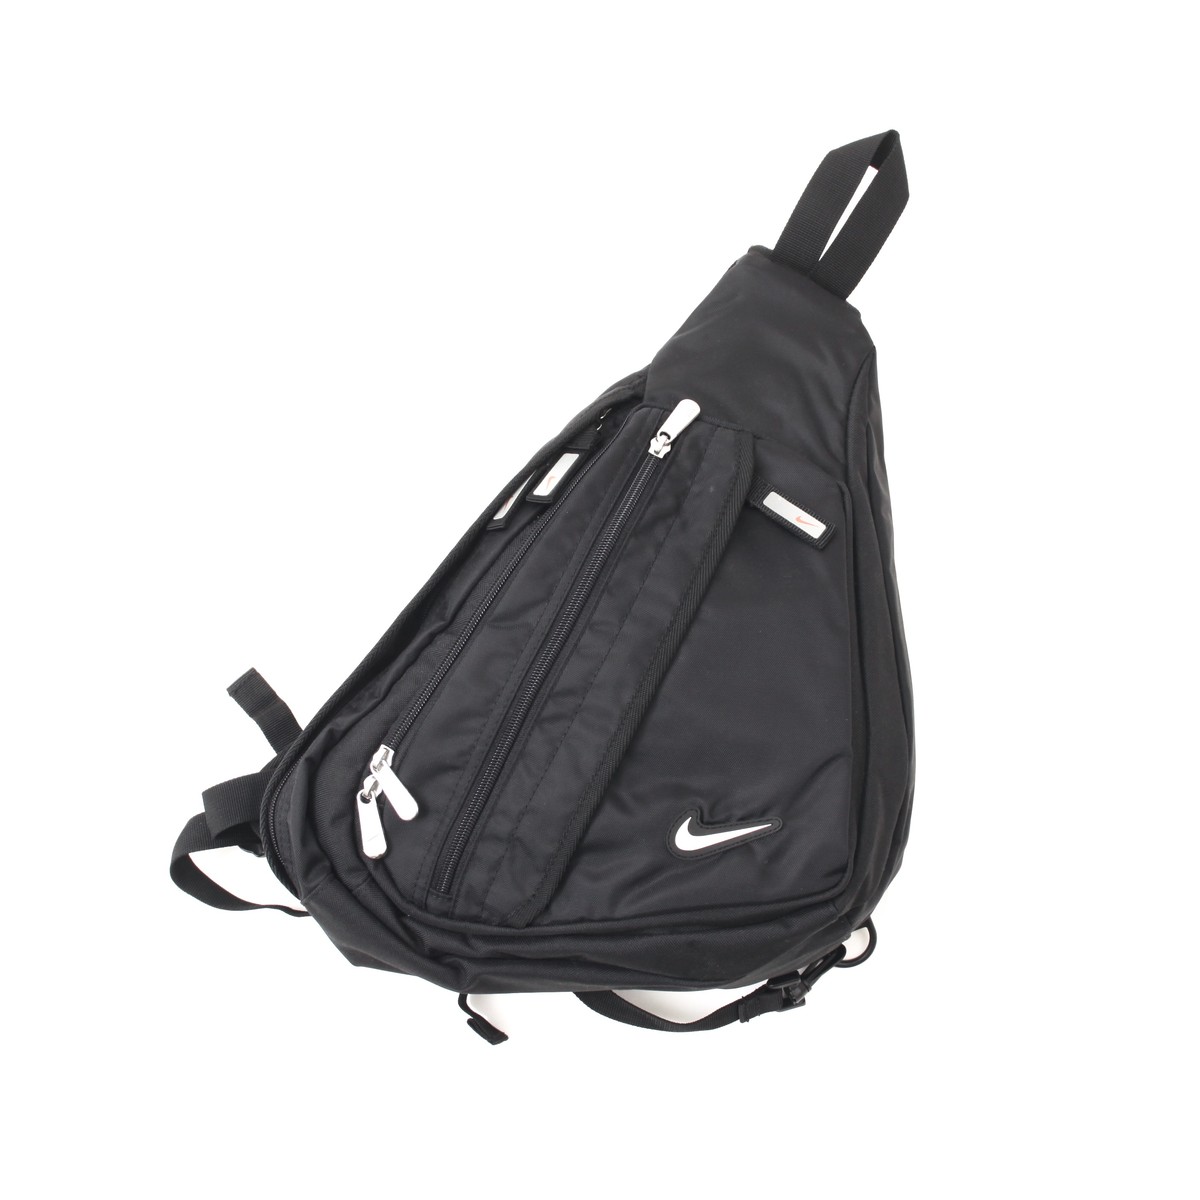 0517. 2000's NIKE sling bag ブラック スリングバッグ クロスボディバッグ ショルダーバッグ 鞄 ナイキ 00s